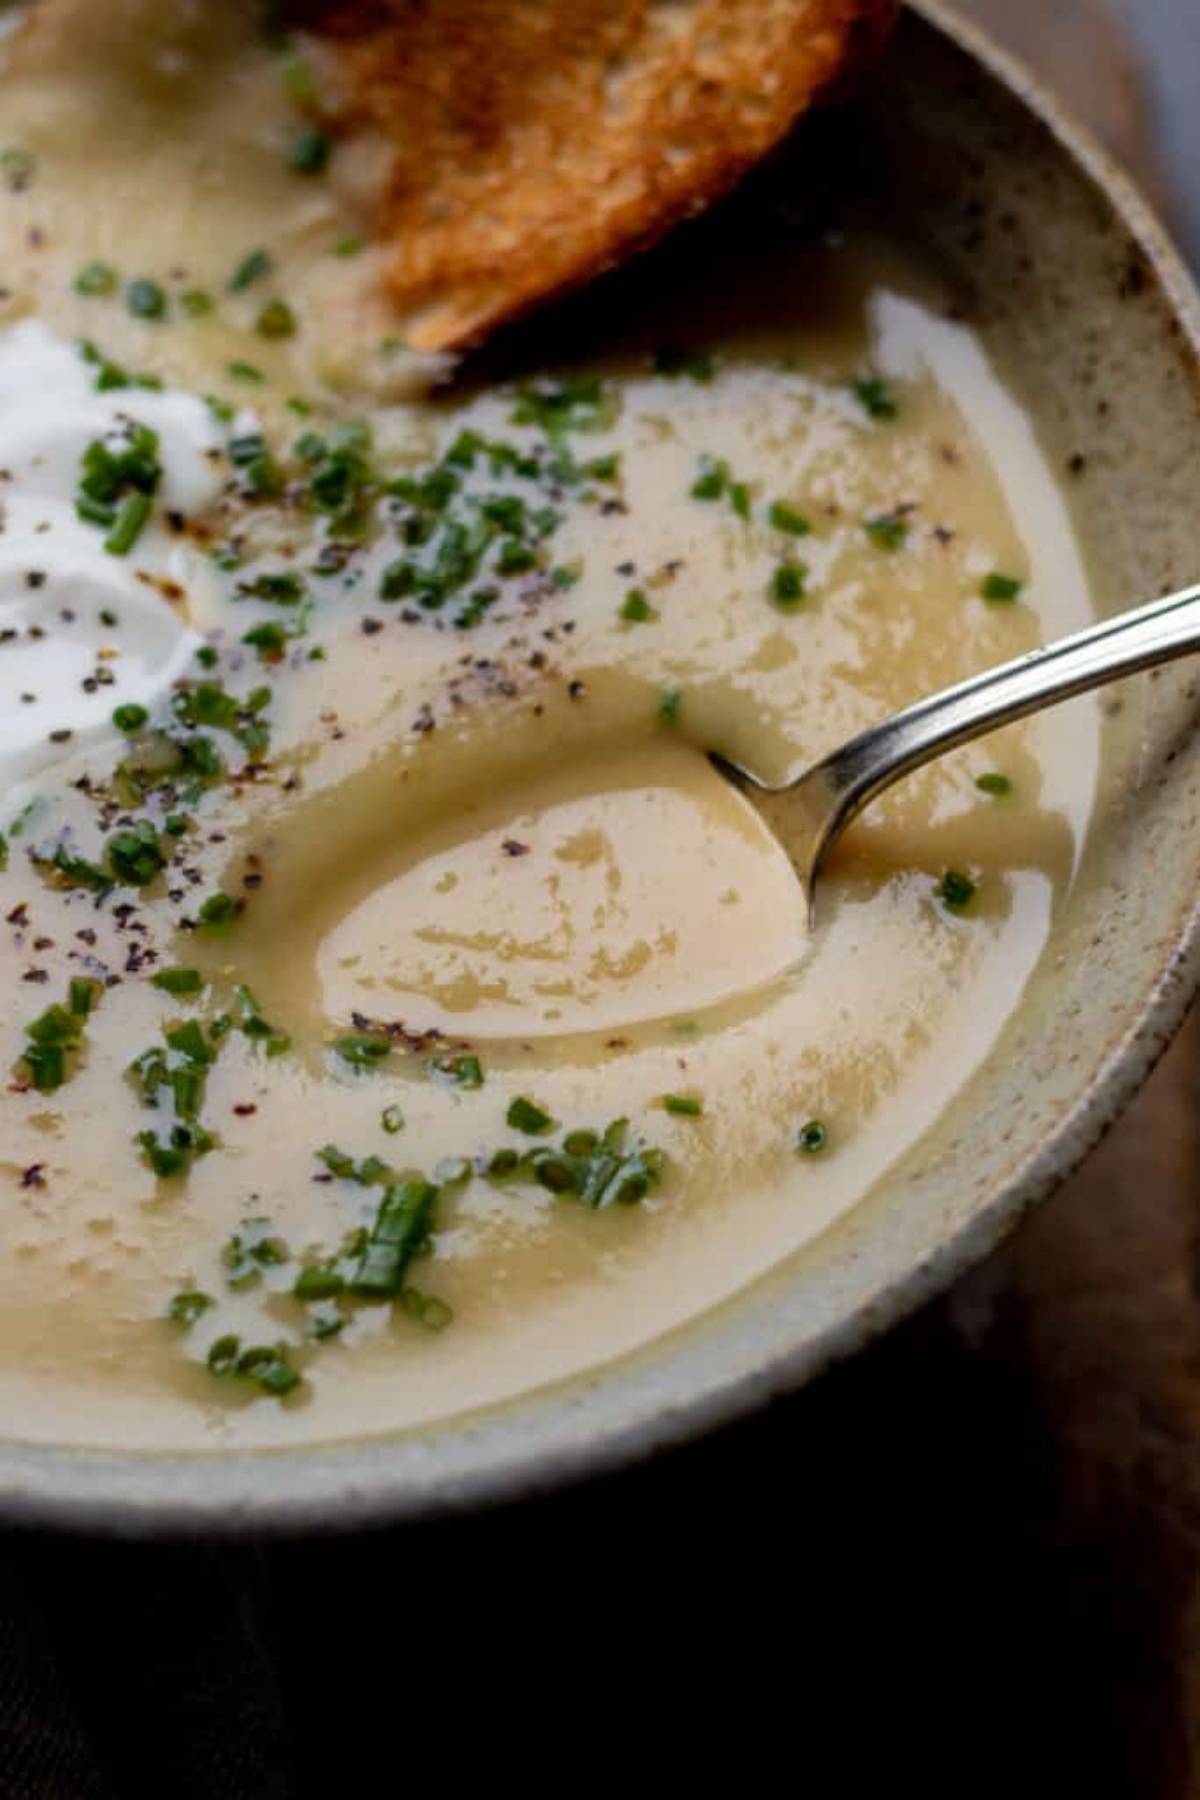 A spoonful of soup closeup in ceramic bowl.